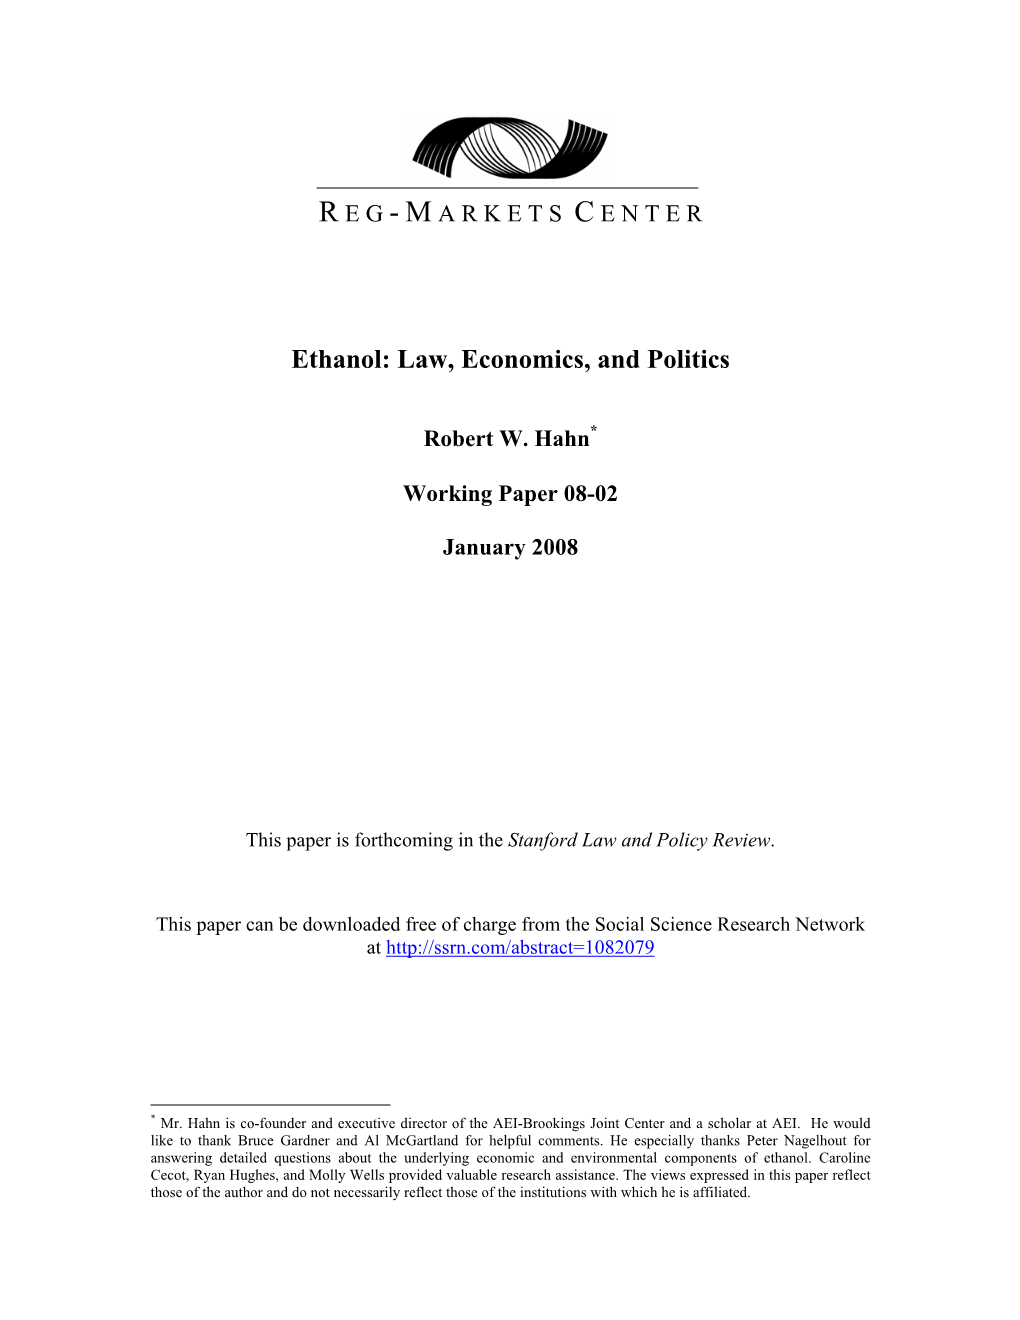 Ethanol: Law, Economics, and Politics